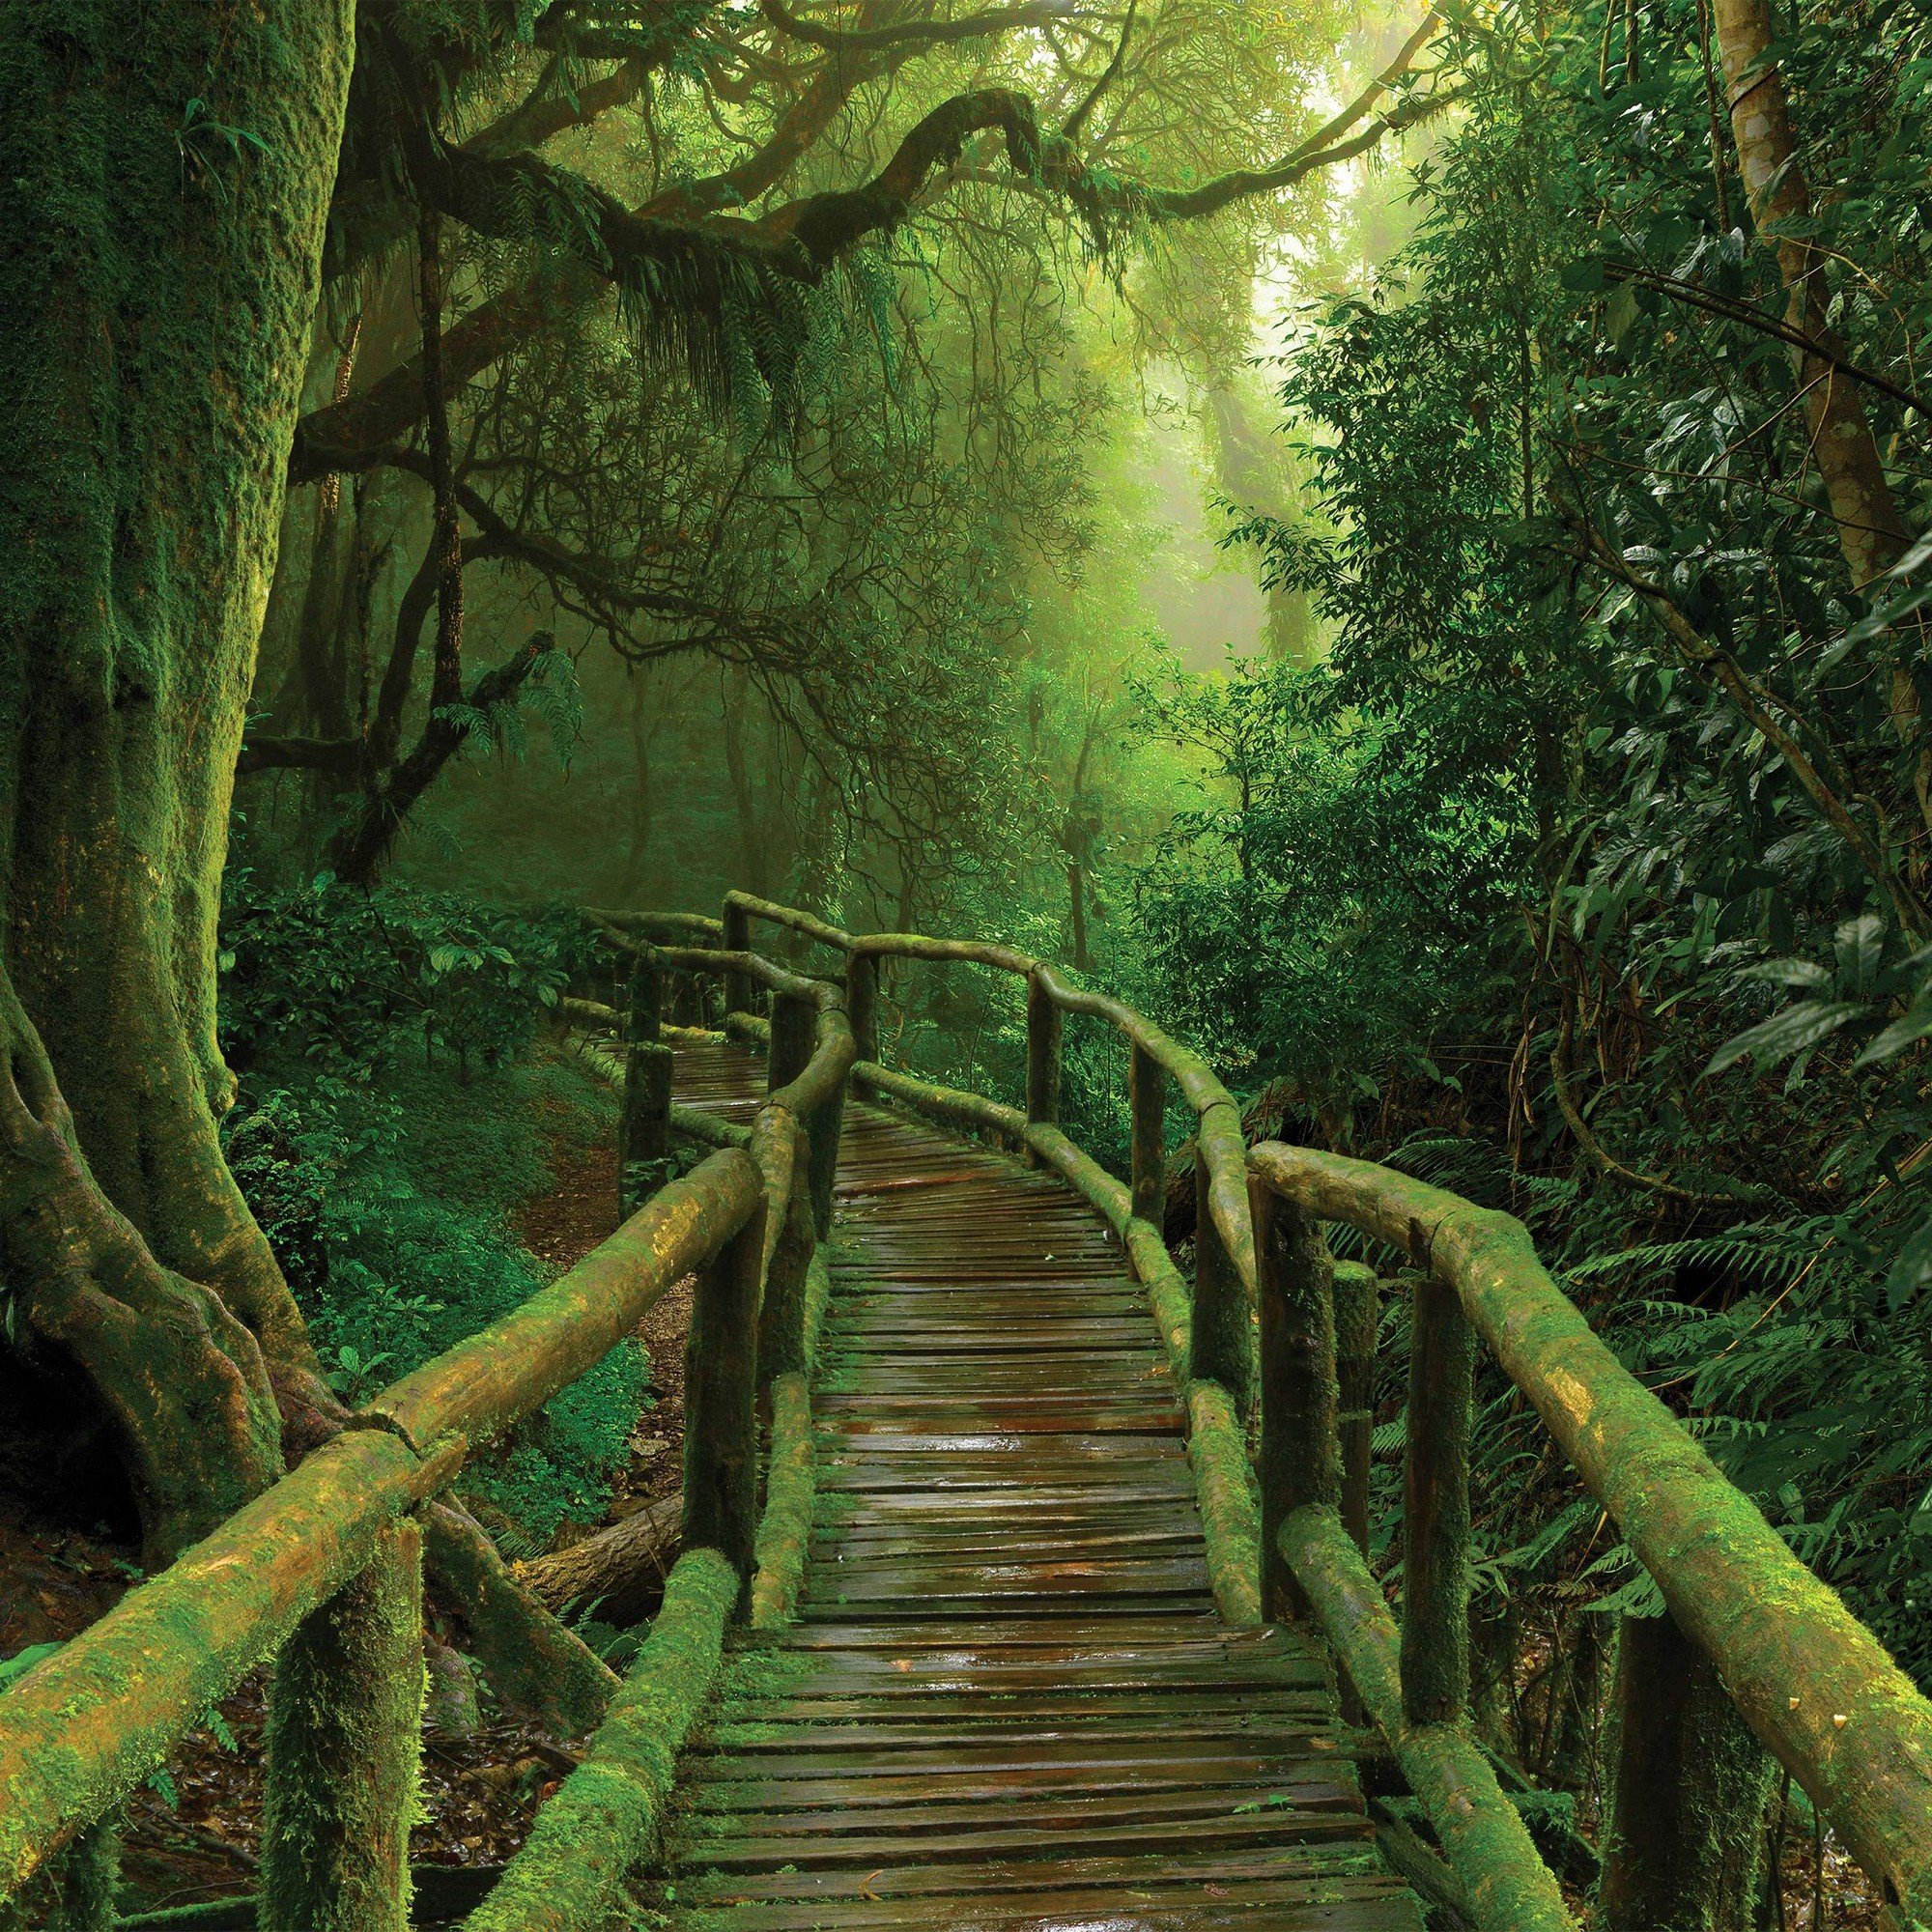 Vlies foto tapeta: Pješački most u džungli - 254x184 cm